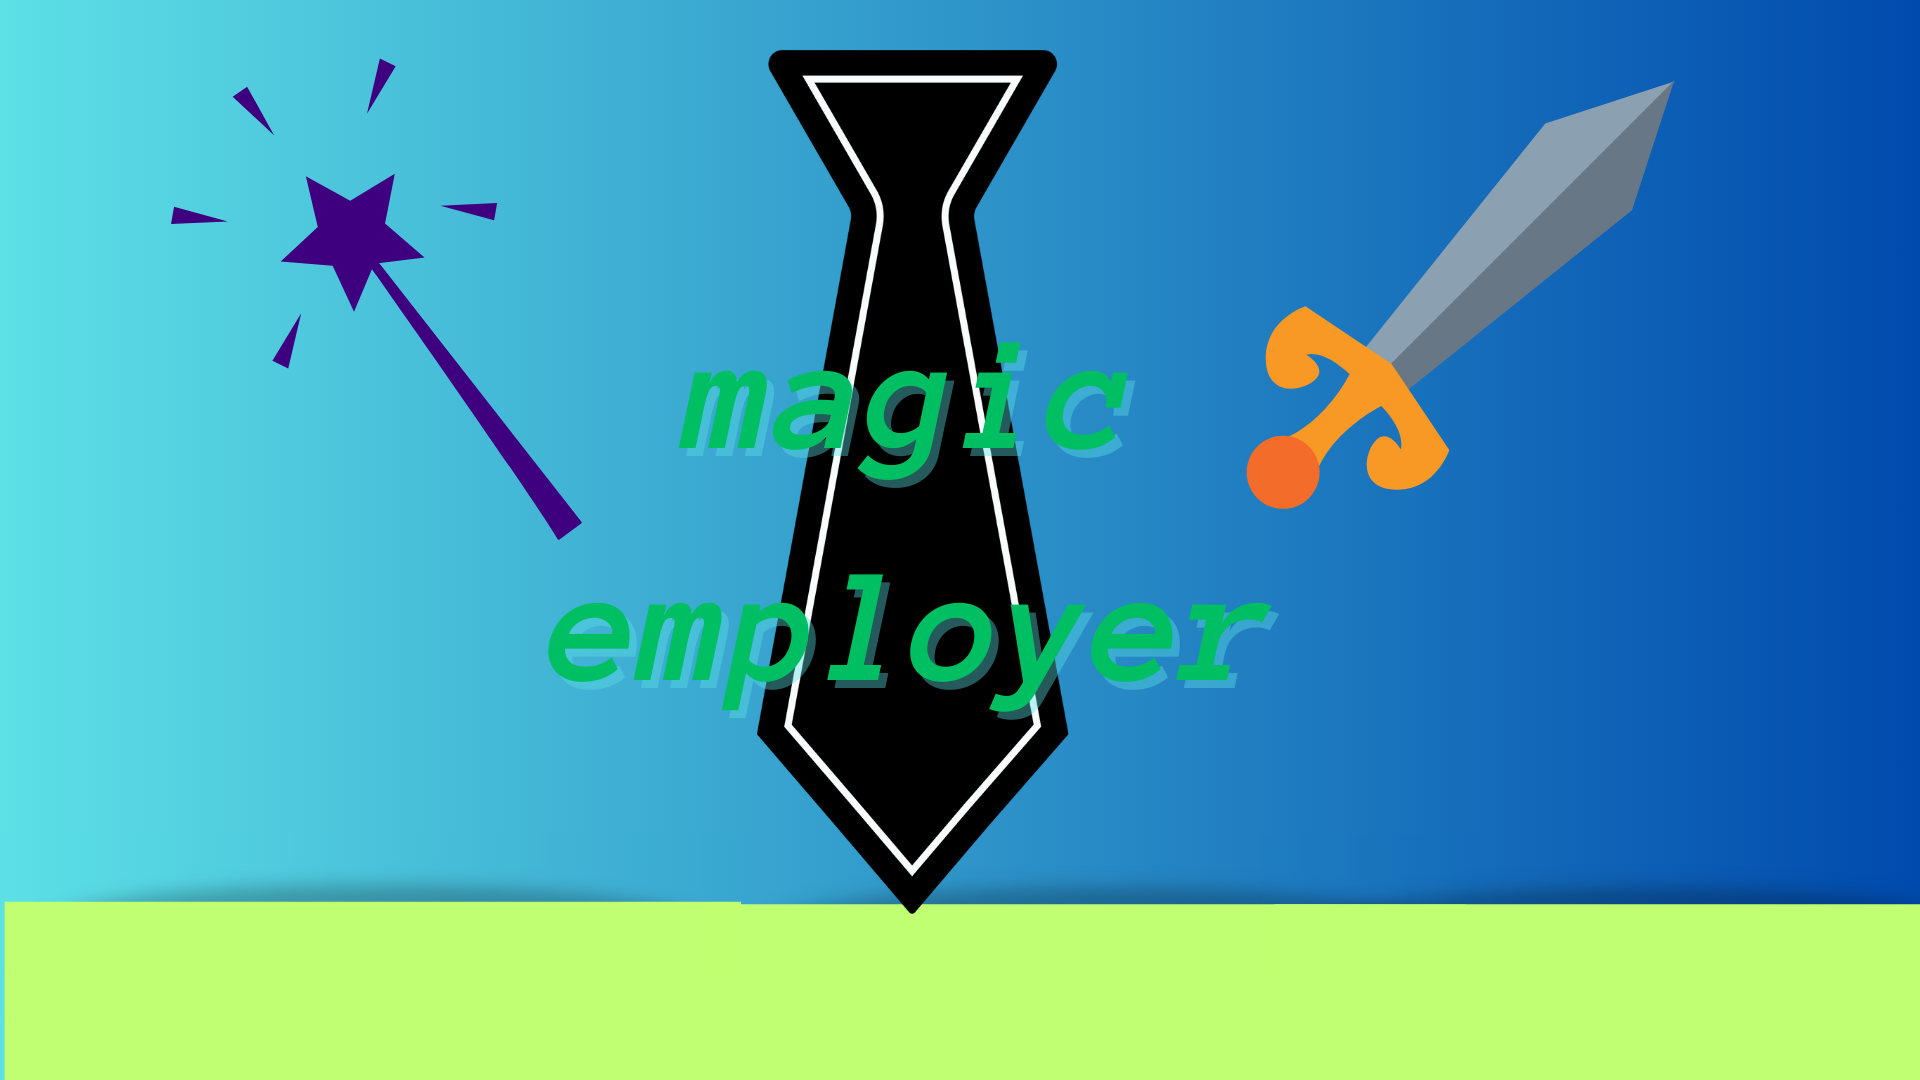 Magic Employer